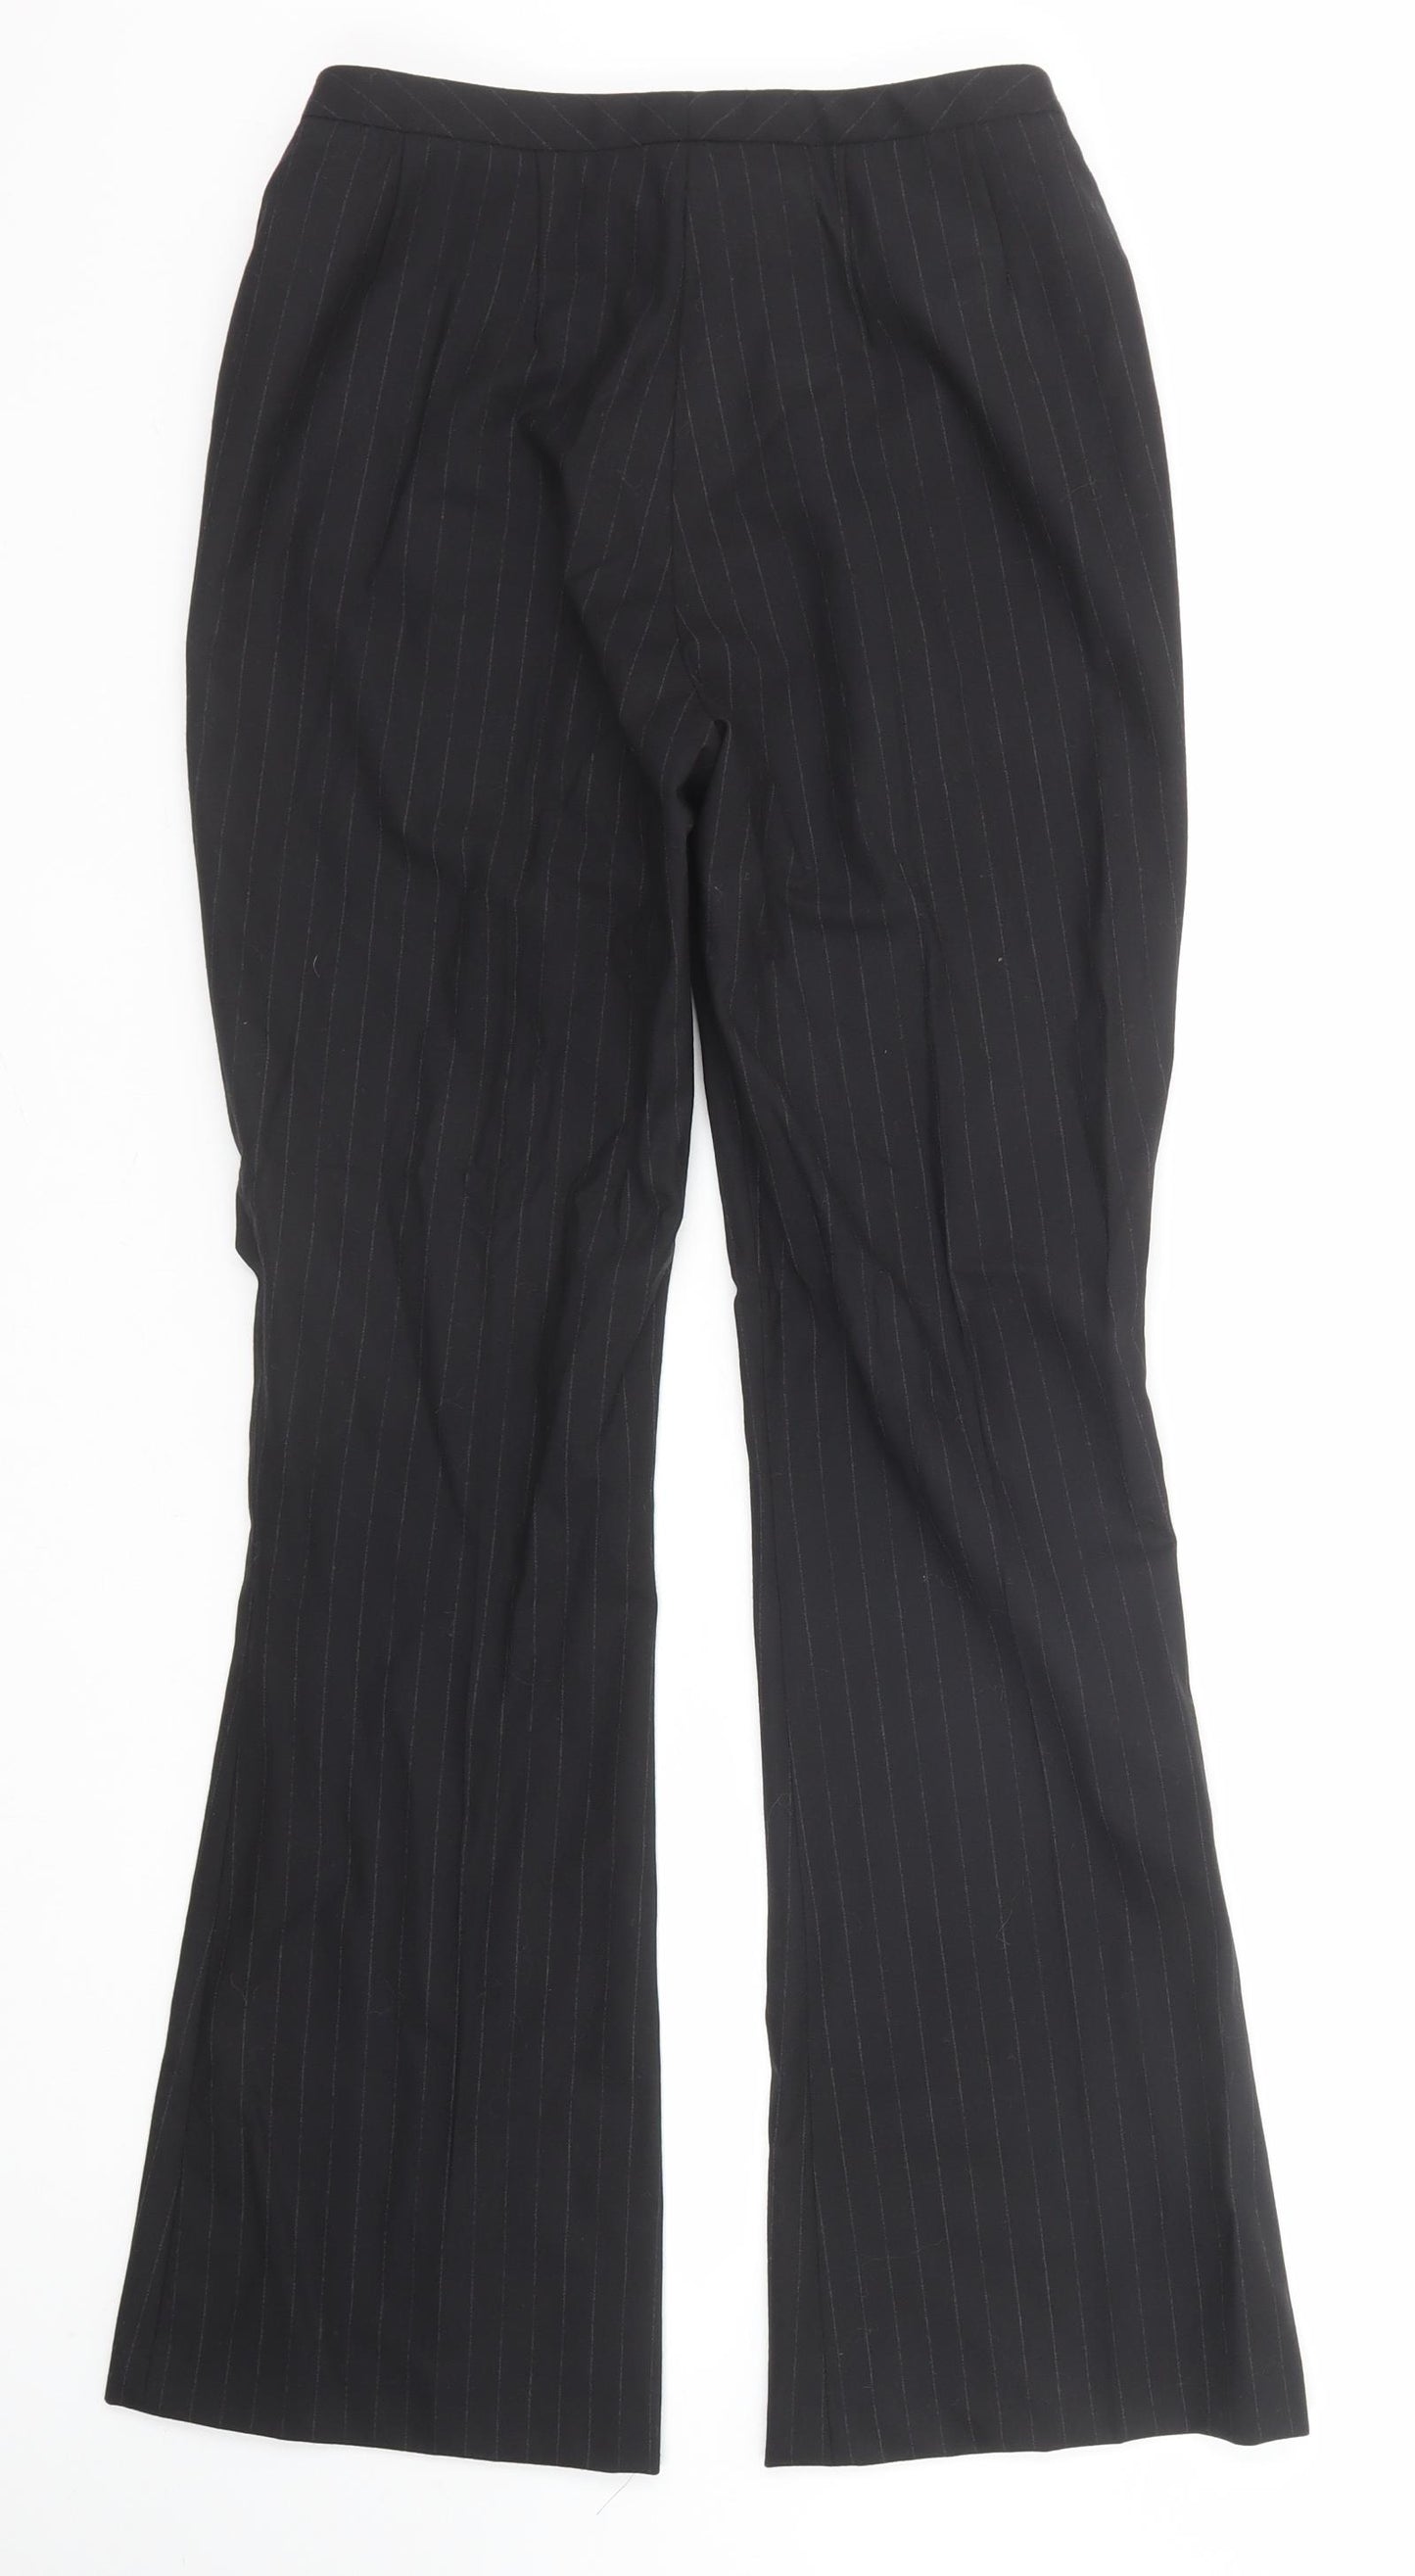 NEXT Womens Black Striped Wool Trousers Size 10 Regular Zip